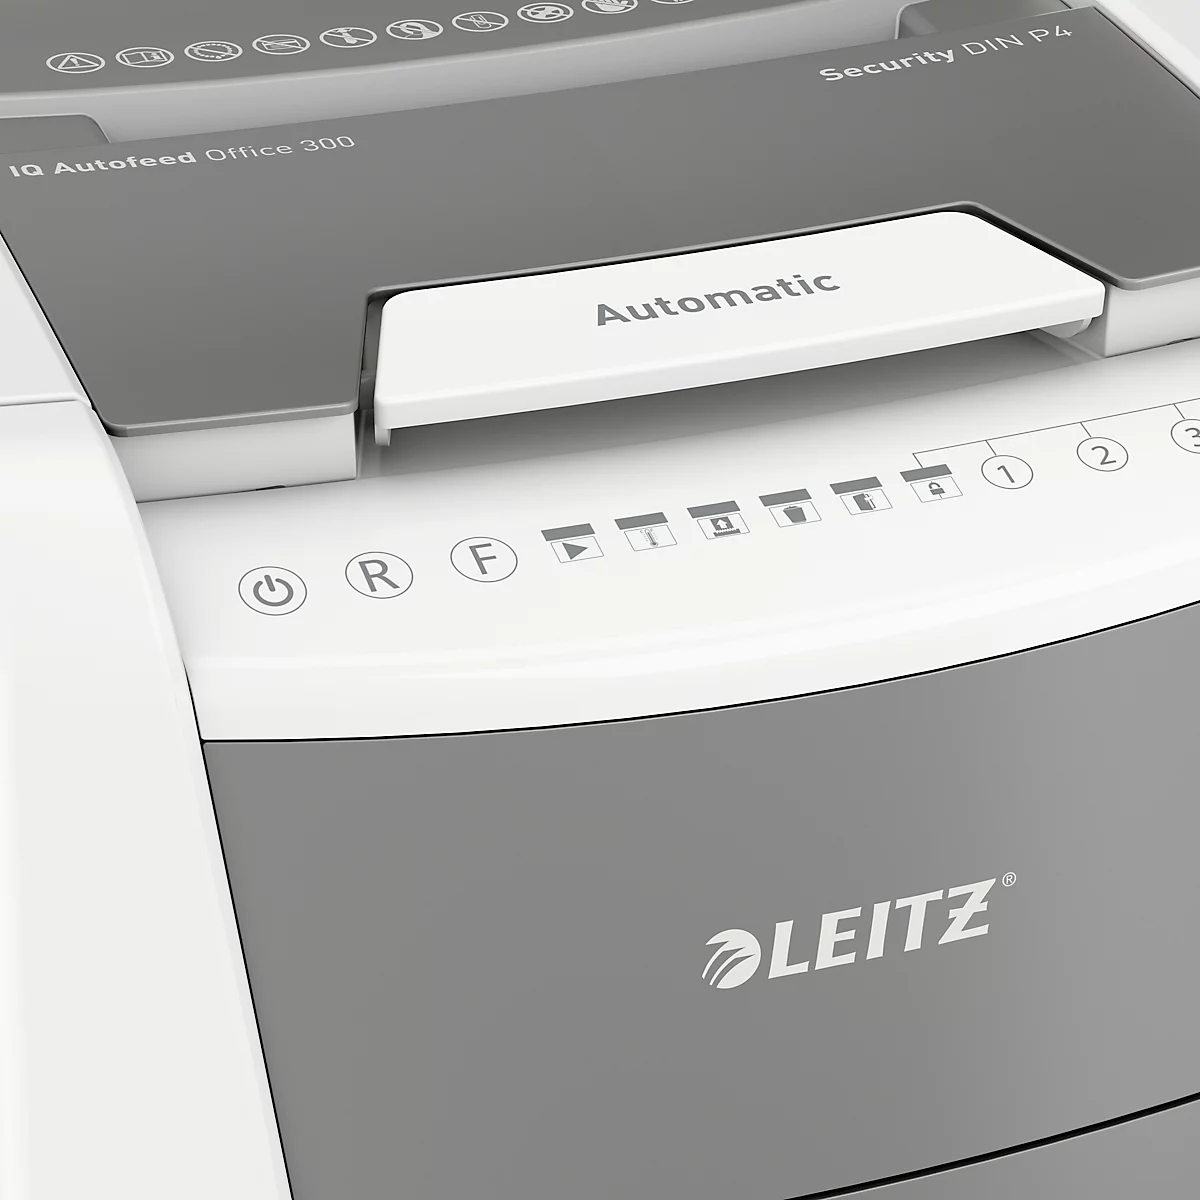 LEITZ Aktenvernichter IQ Autofeed Office Pro 300, vollautomatisch, Partikelschnitt 4 x 26 mm P-4, 60 l, 10-300 Blatt Schneidkapazität, mit Lenkrollen, weiss